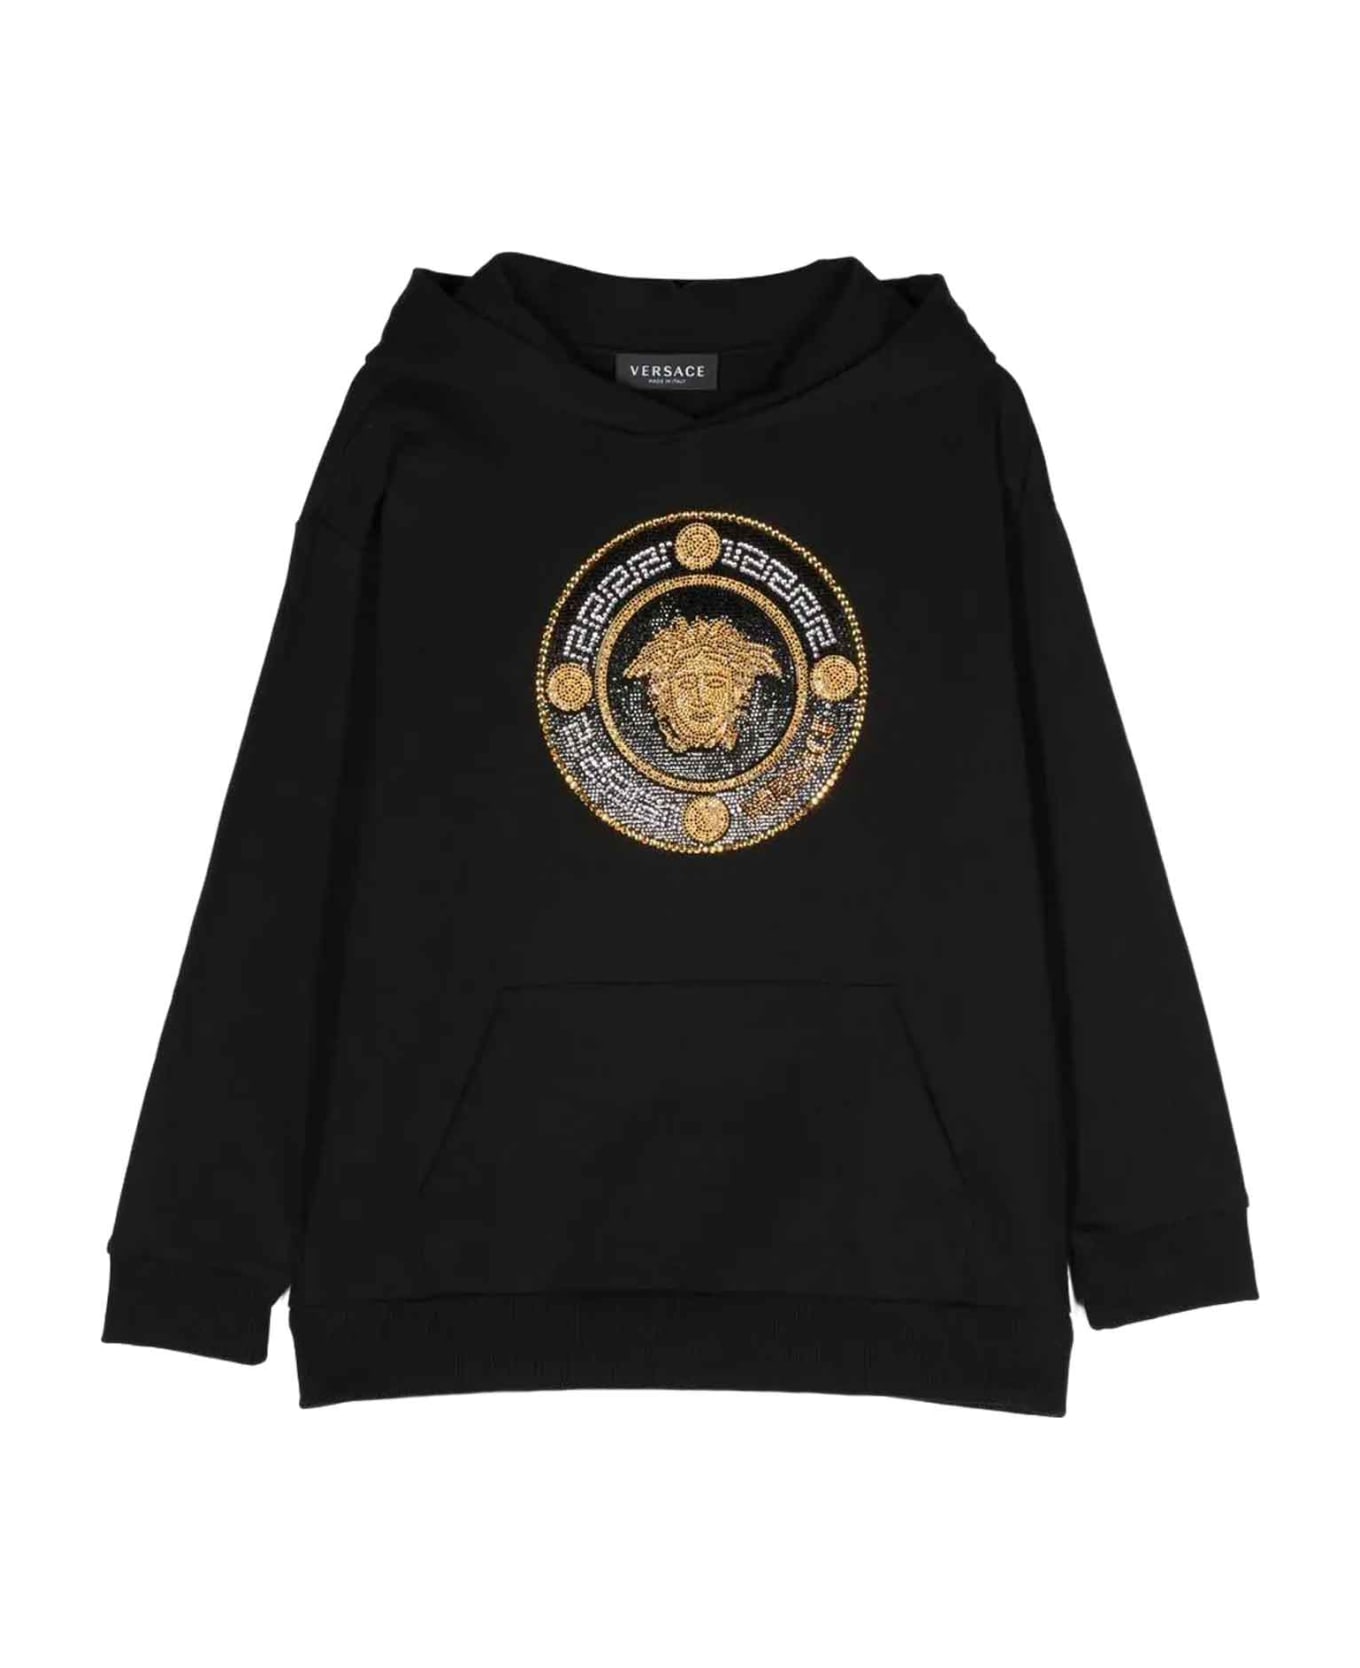 Young Versace Black Sweatshirt Unisex Kids - Nero/oro